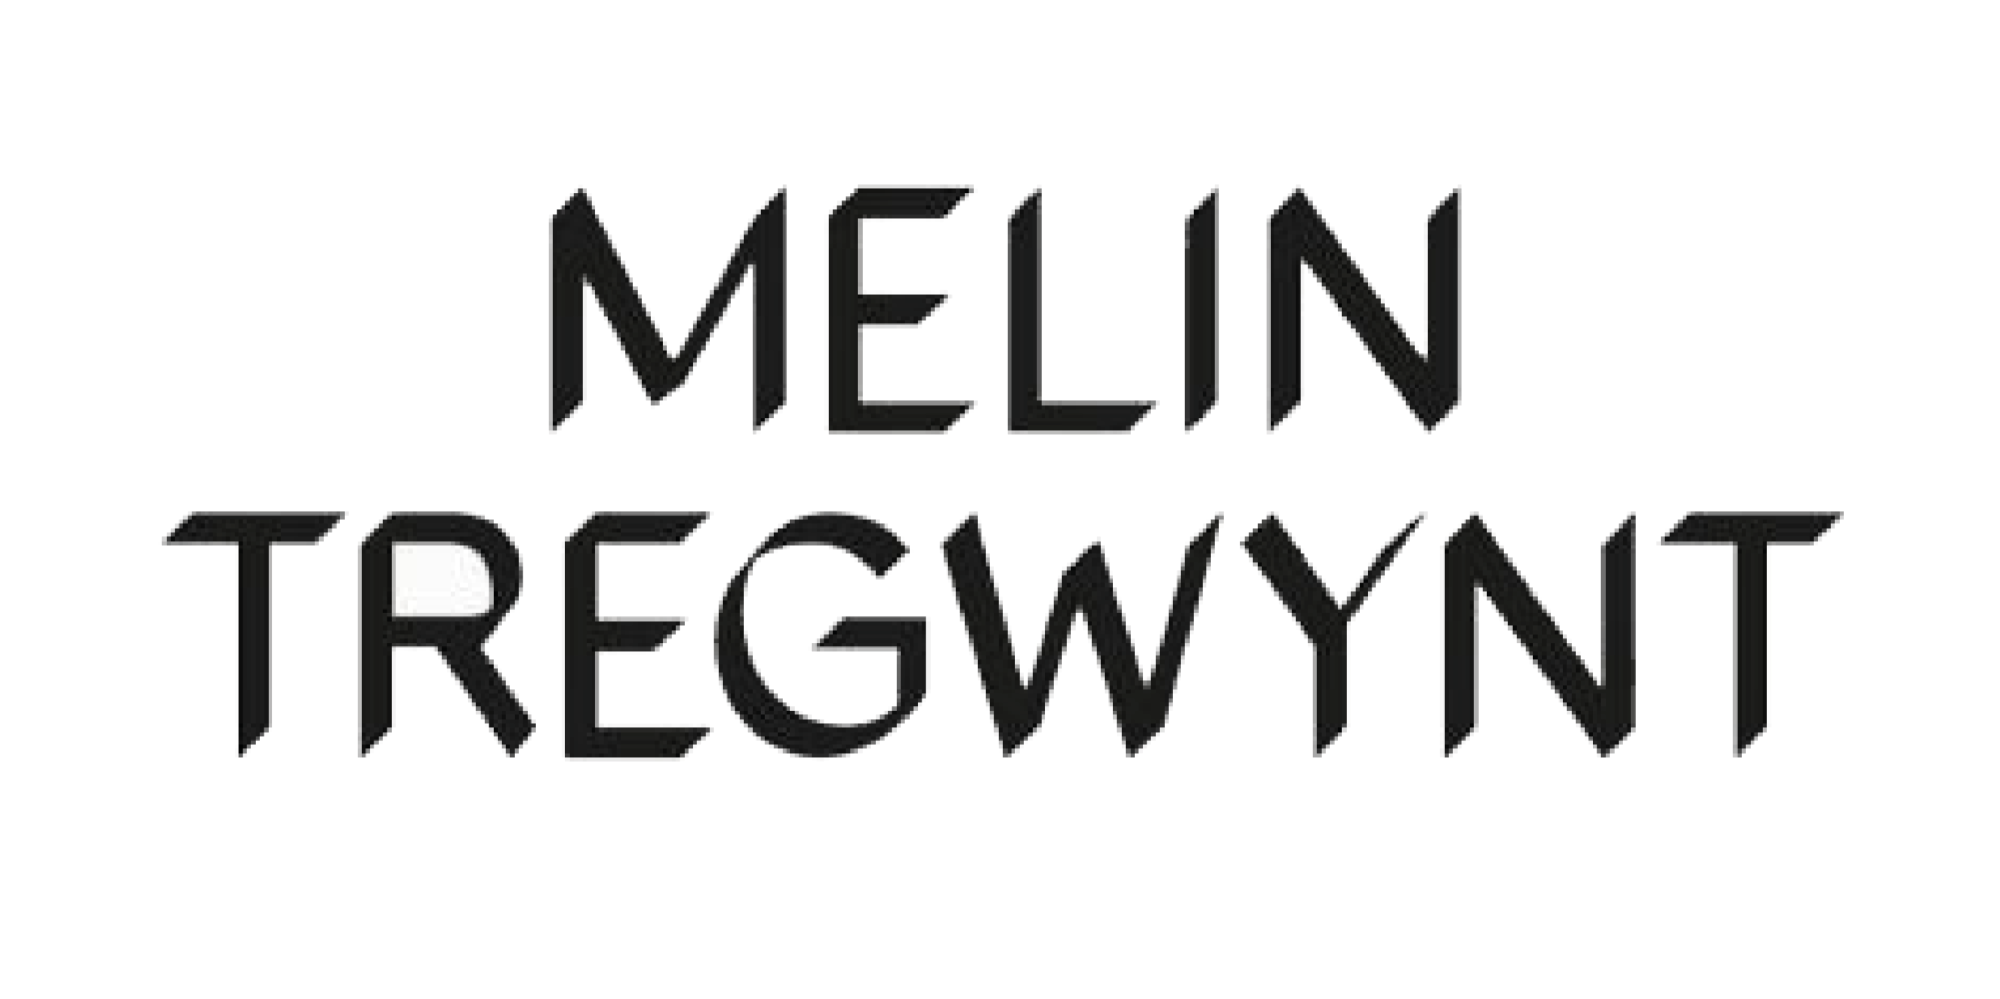 Melin Tregwynt (resize).png